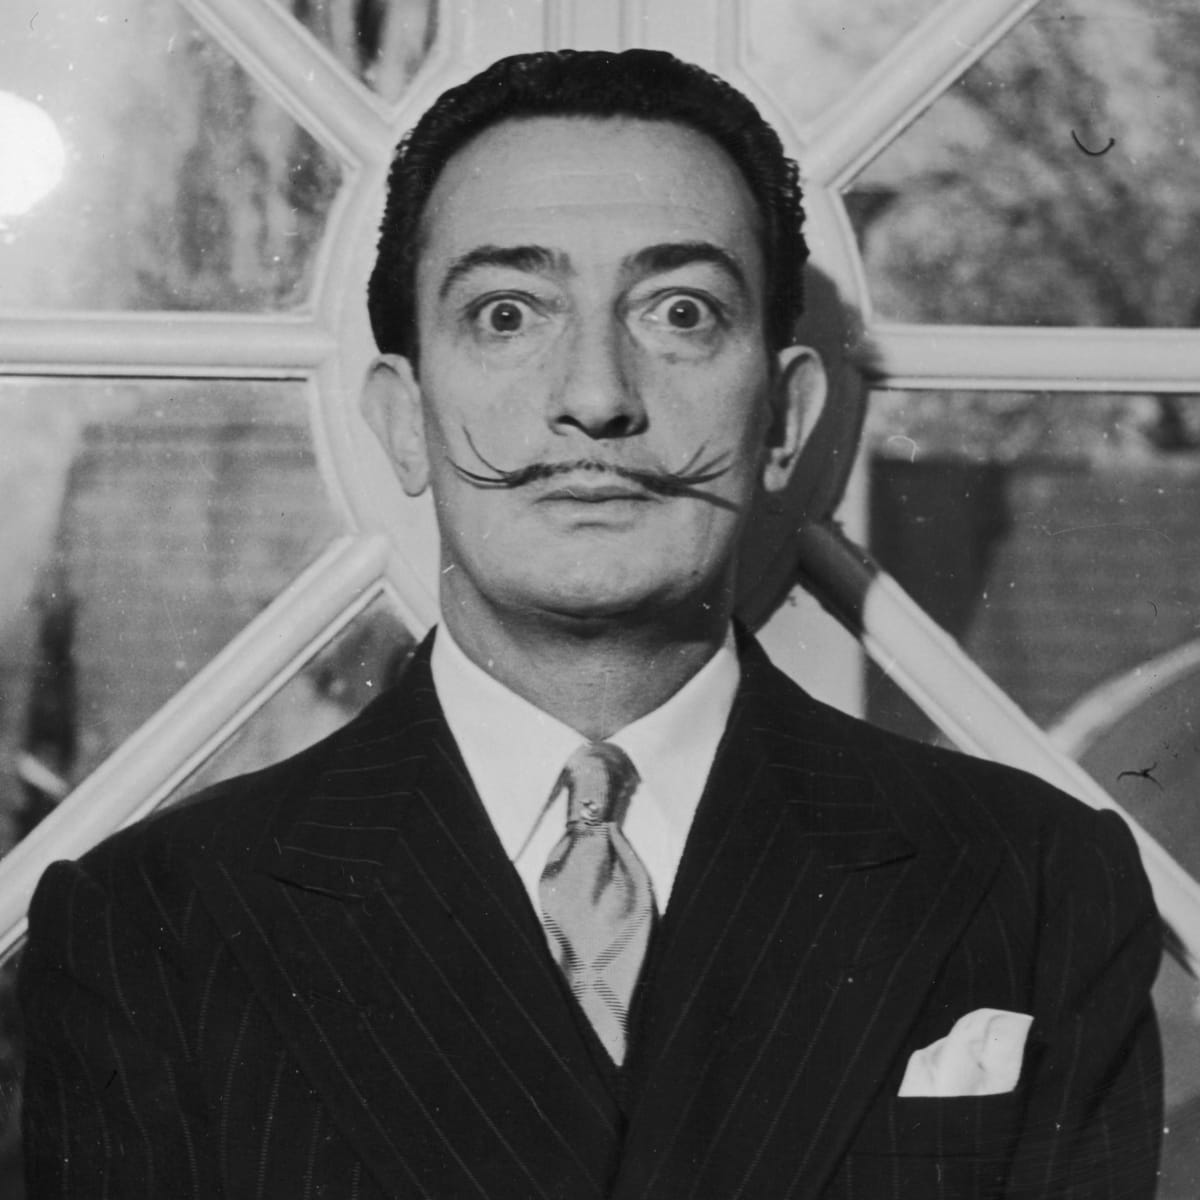 Salvador Dali - Artist With Handlebar Mustache